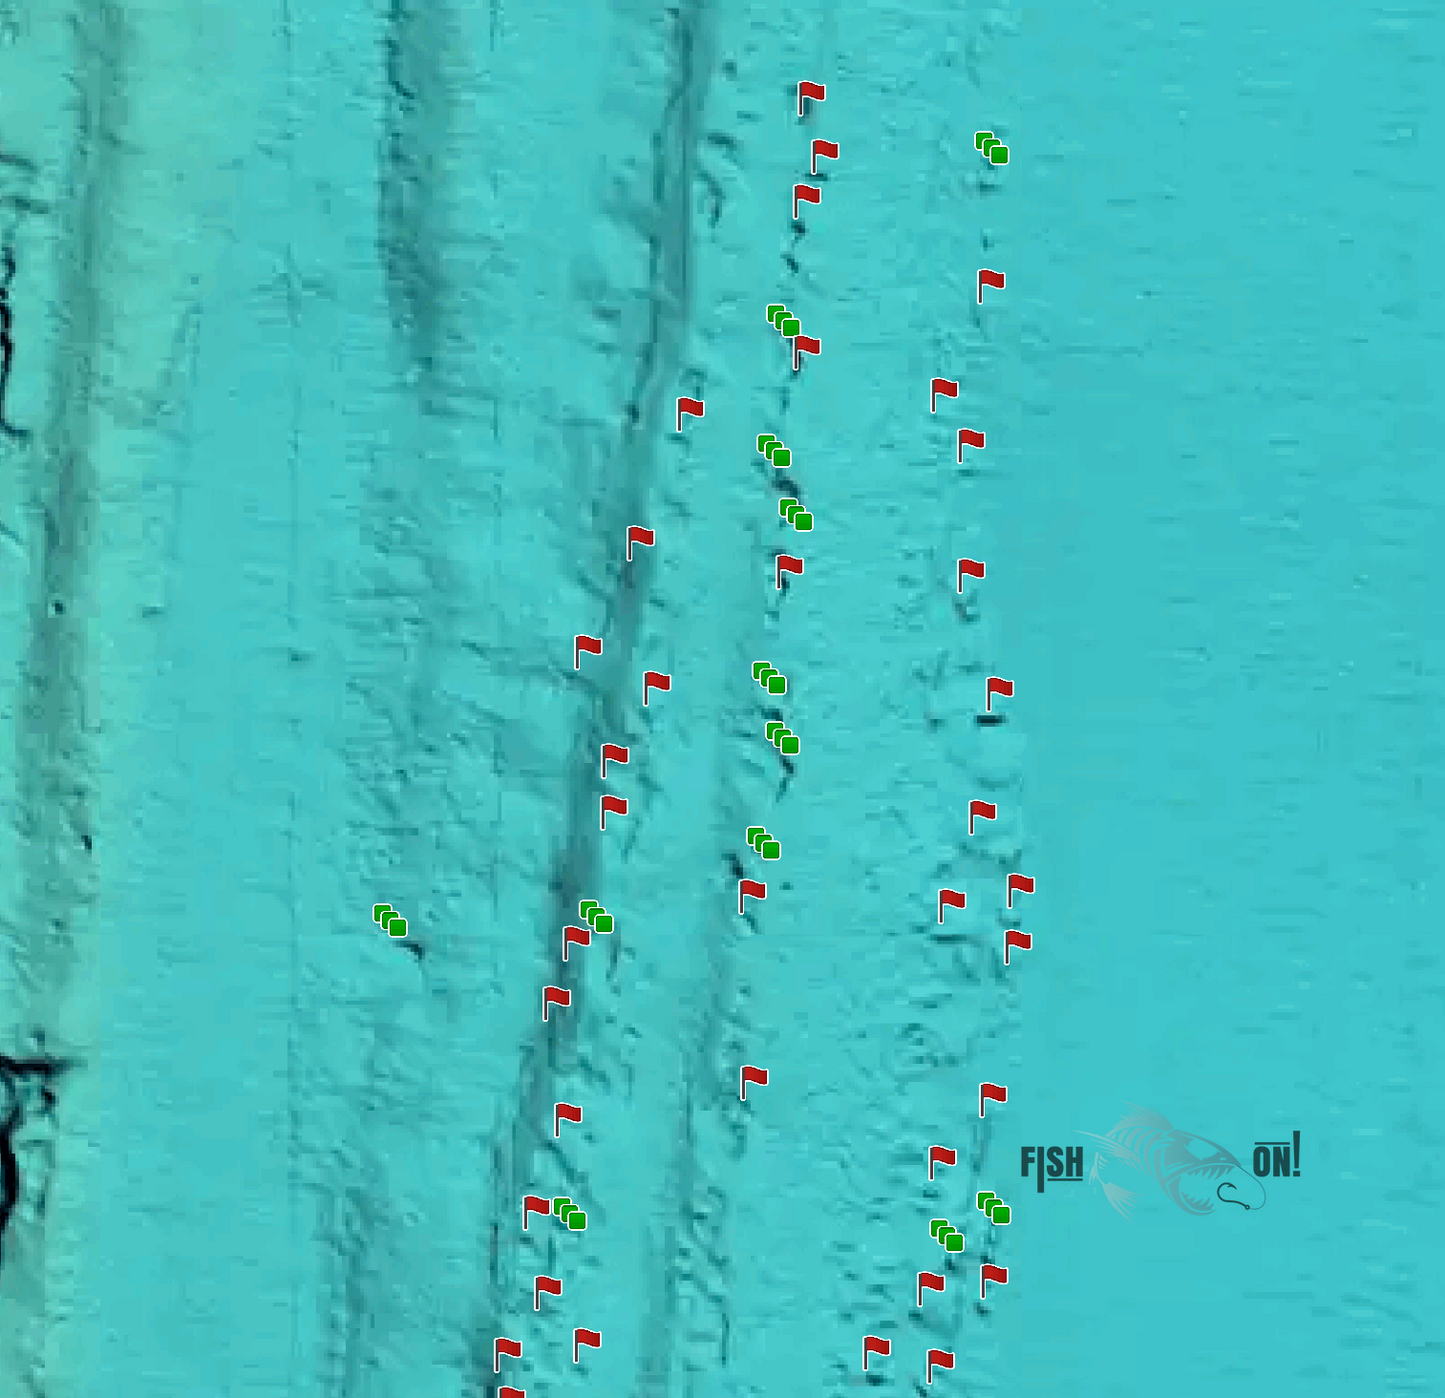 Palm Beach Fishing Spots - GPS numbers